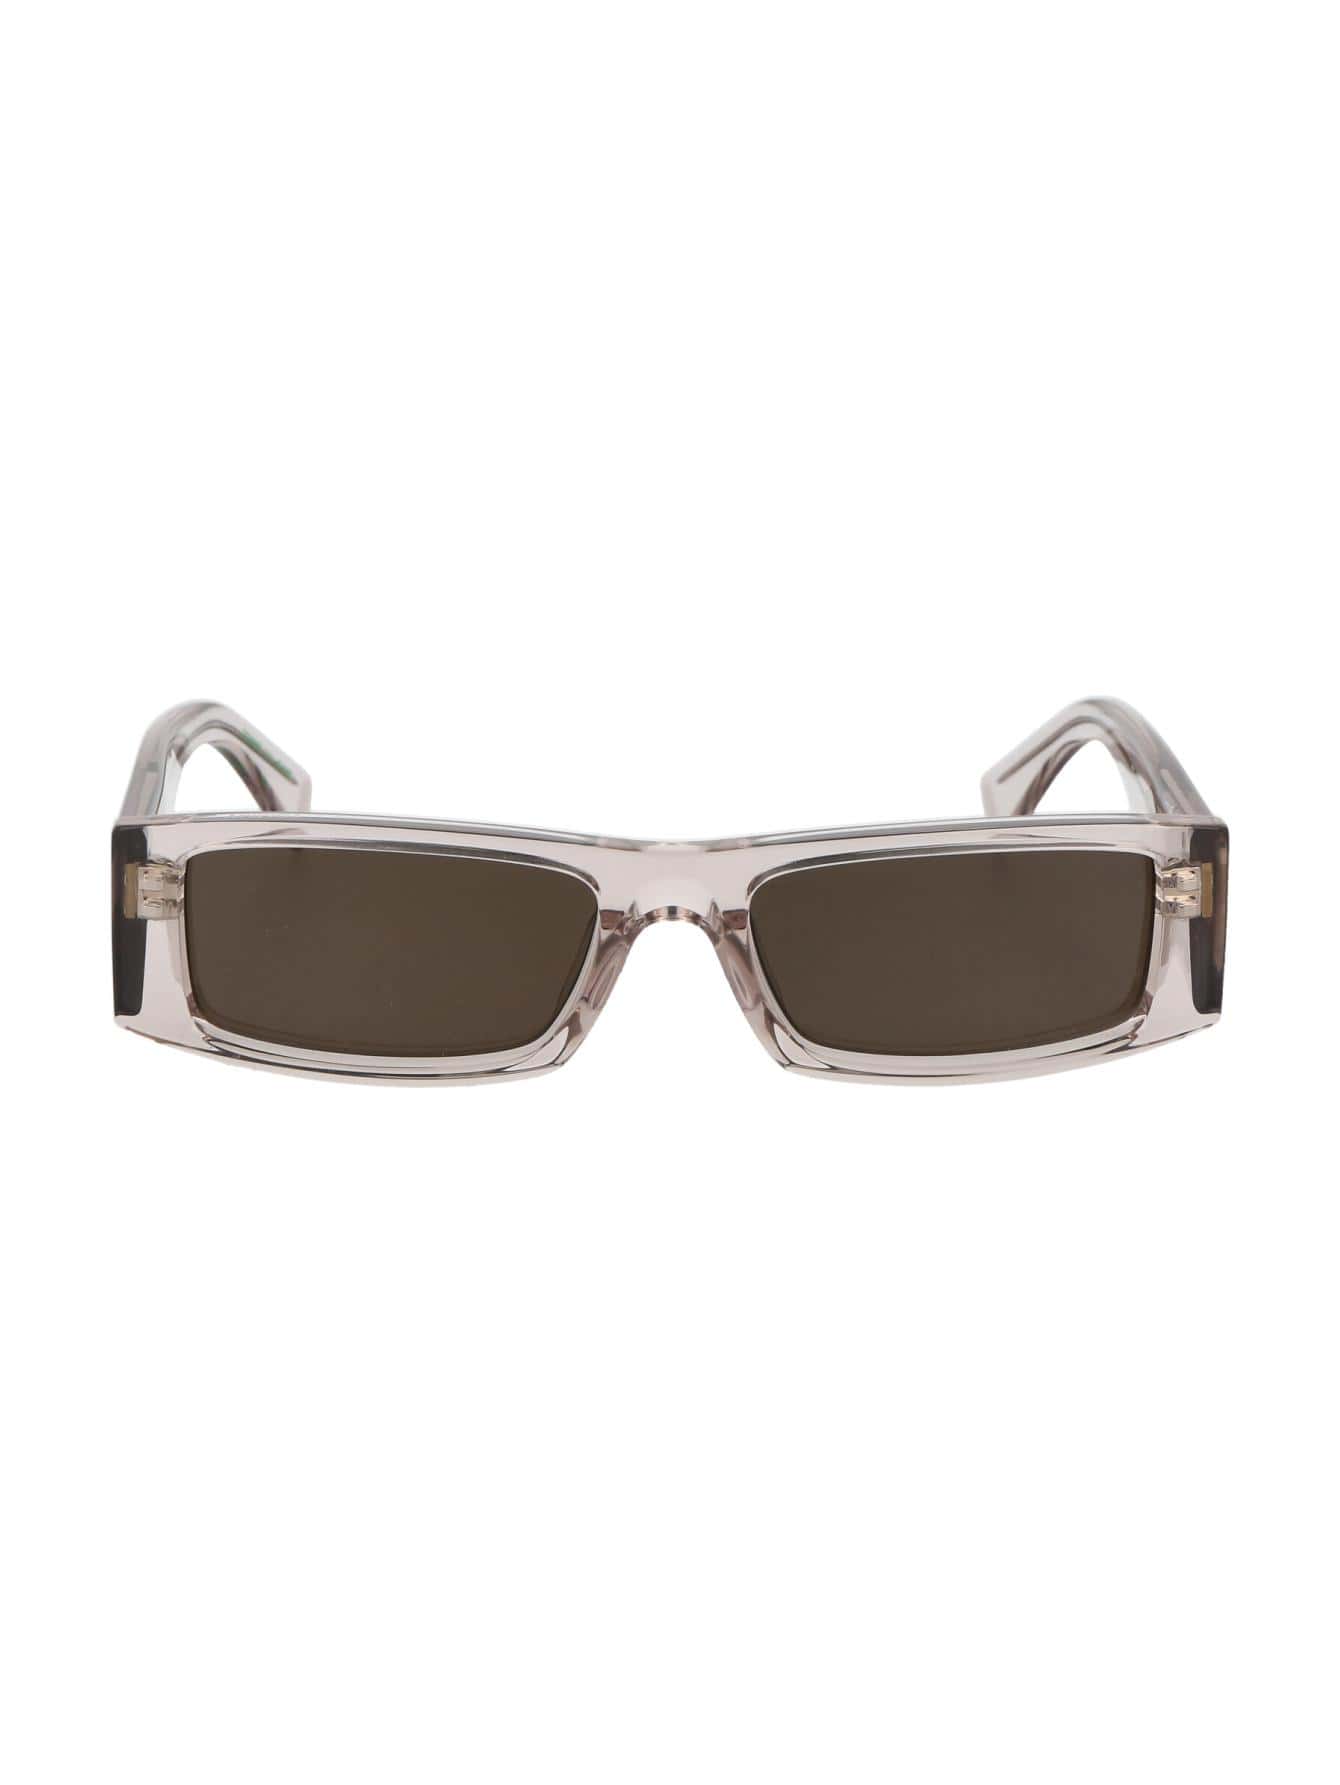 Мужские солнцезащитные очки Tommy Hilfiger DECOR TJ0092S10A70, многоцветный мужские солнцезащитные очки tommy hilfiger decor th1952s0vkpl многоцветный